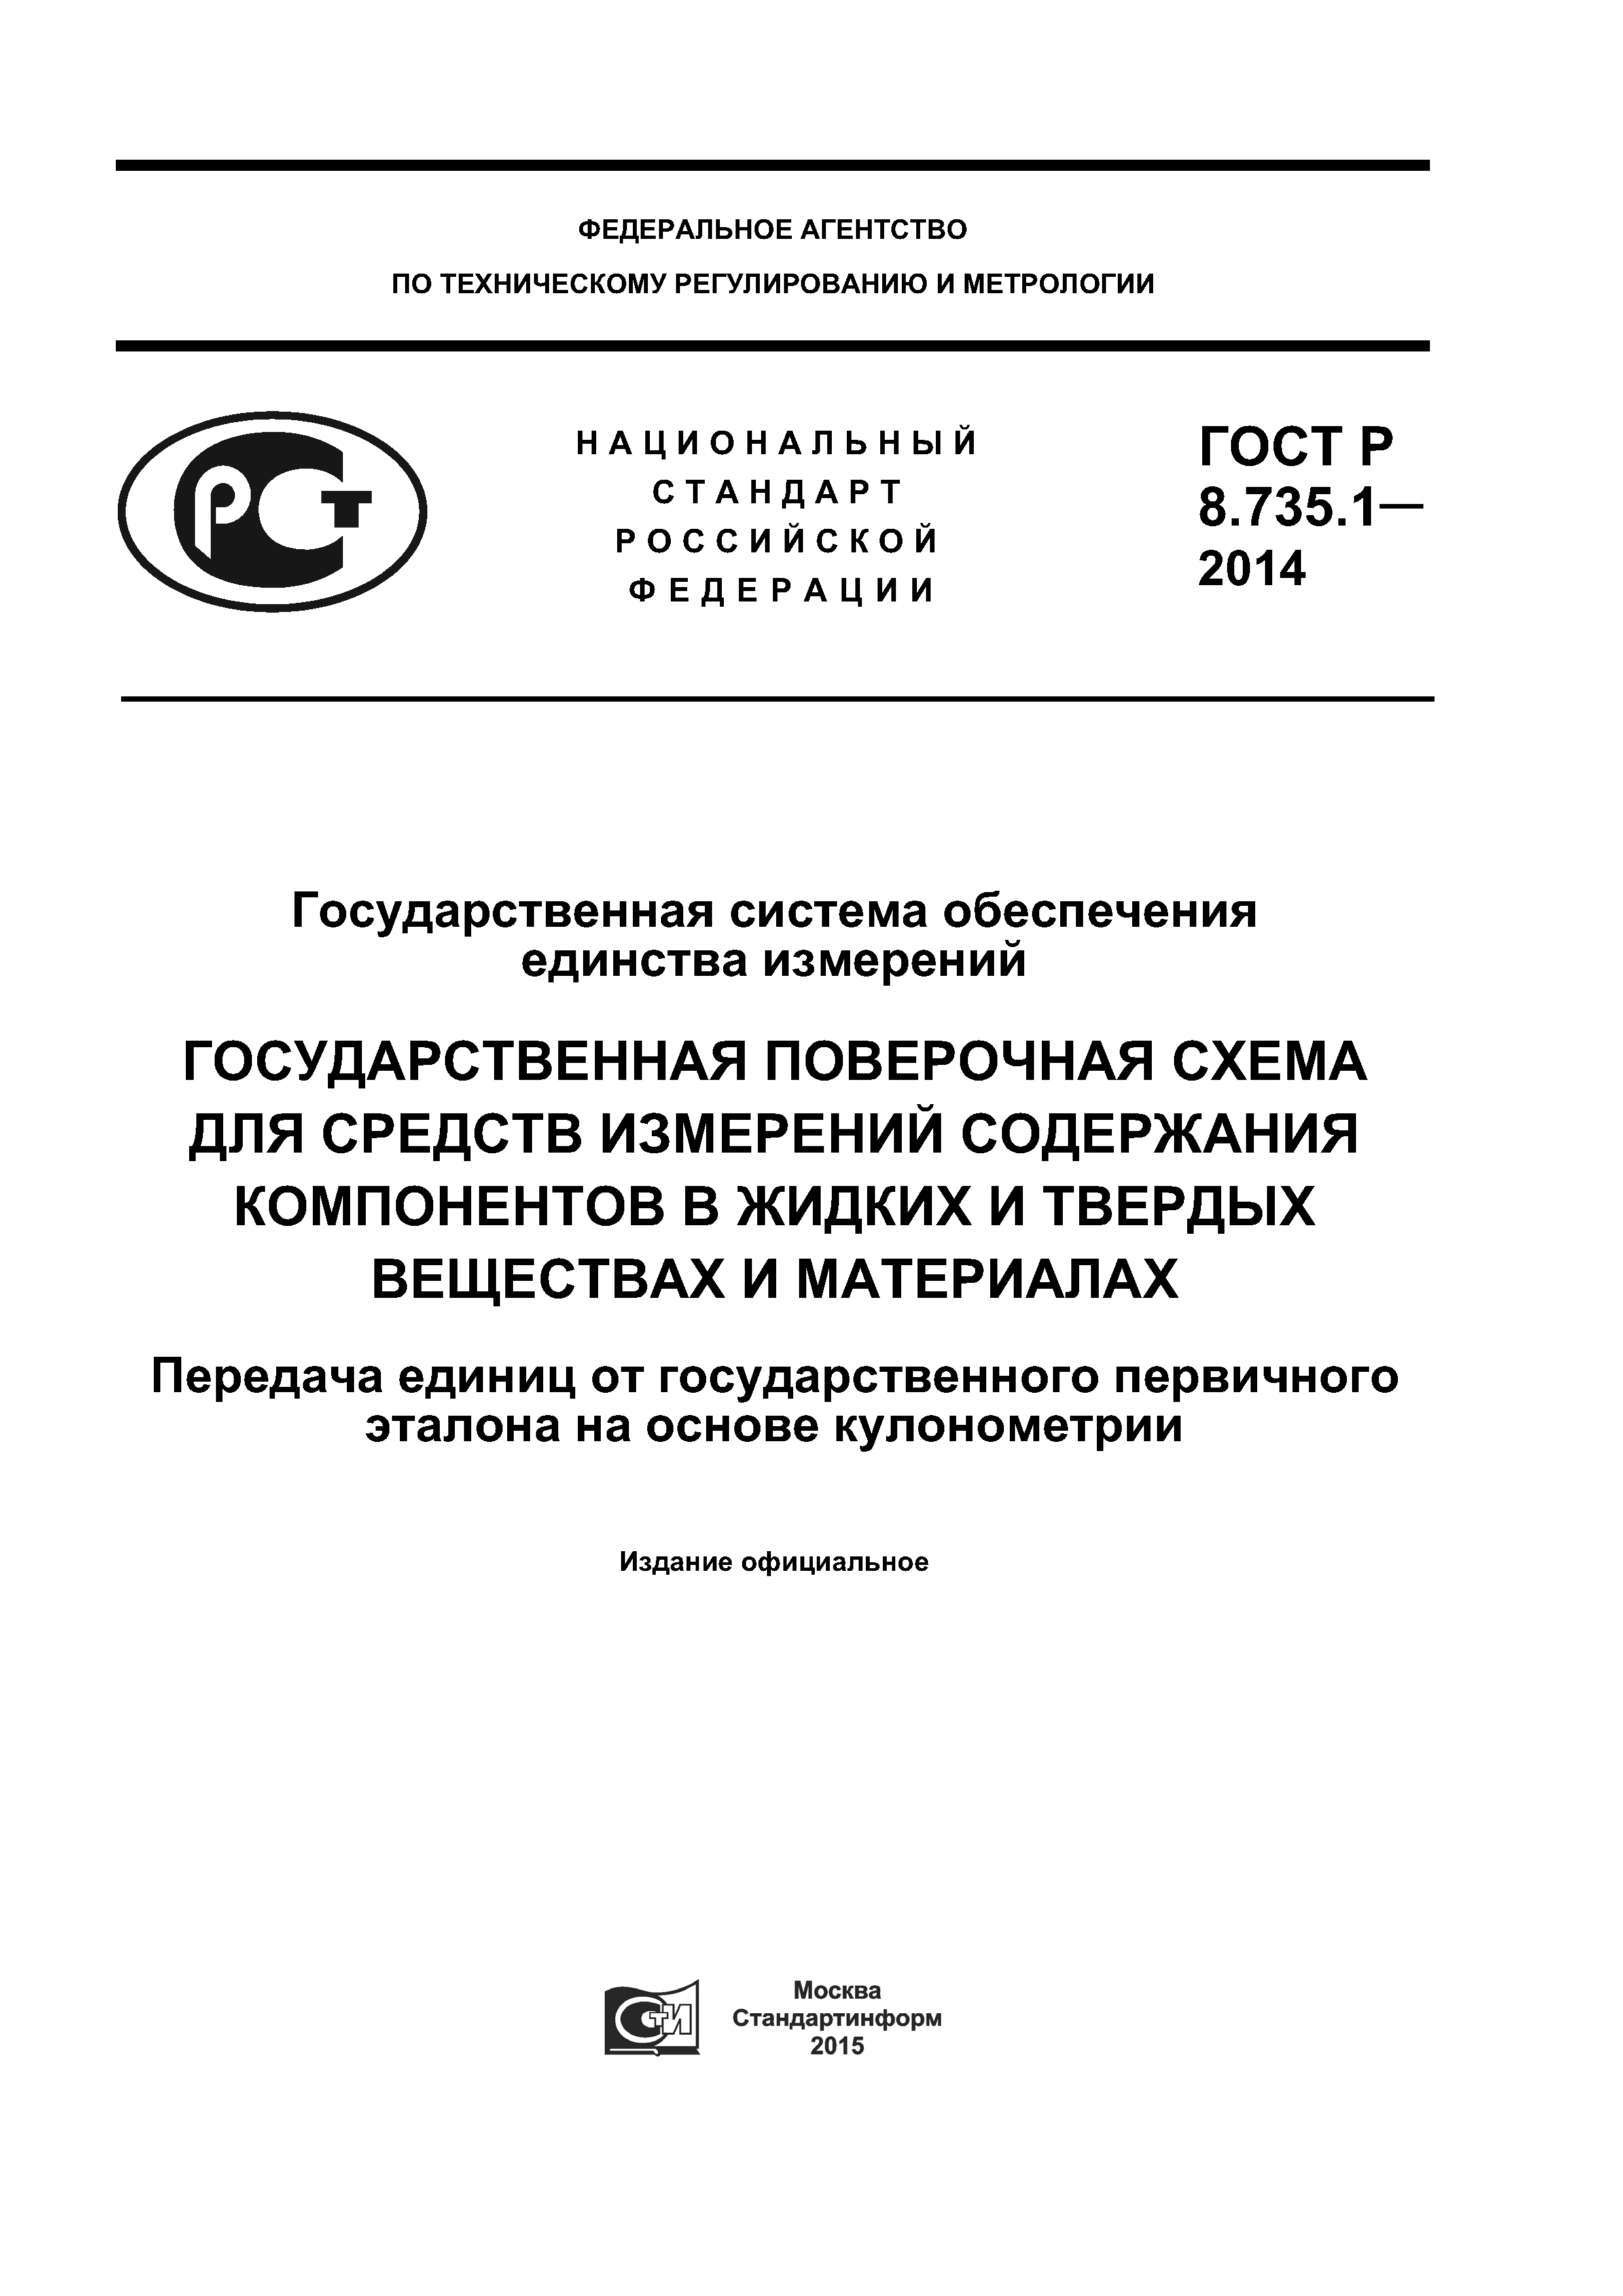 ГОСТ Р 8.735.1-2014